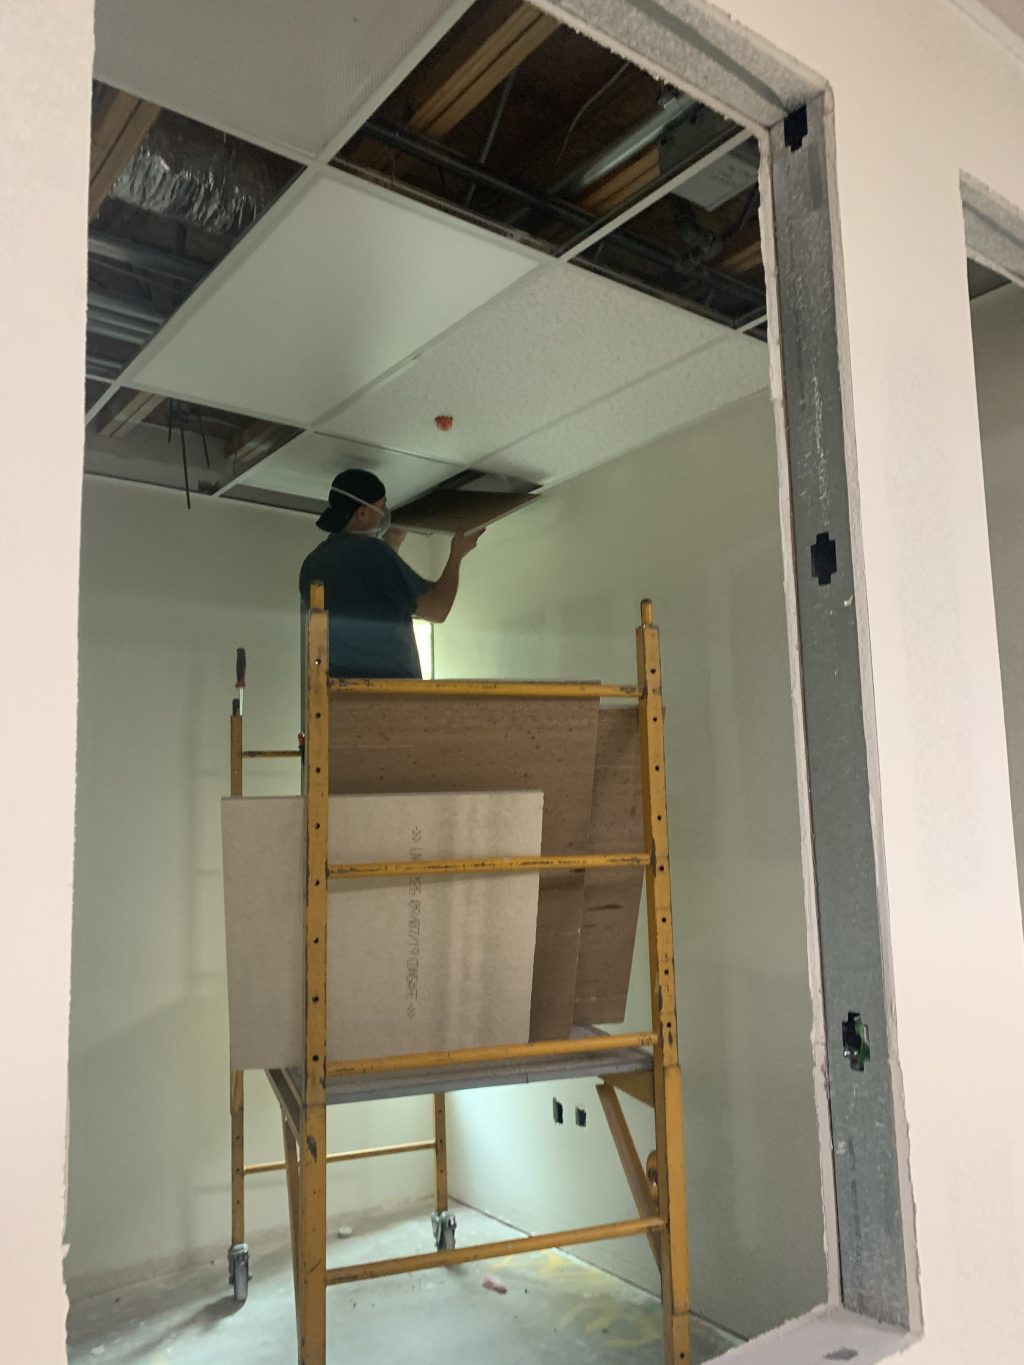 Image of T-Bar construction, Sierra Drywall Inc, T-Bar Ceiling